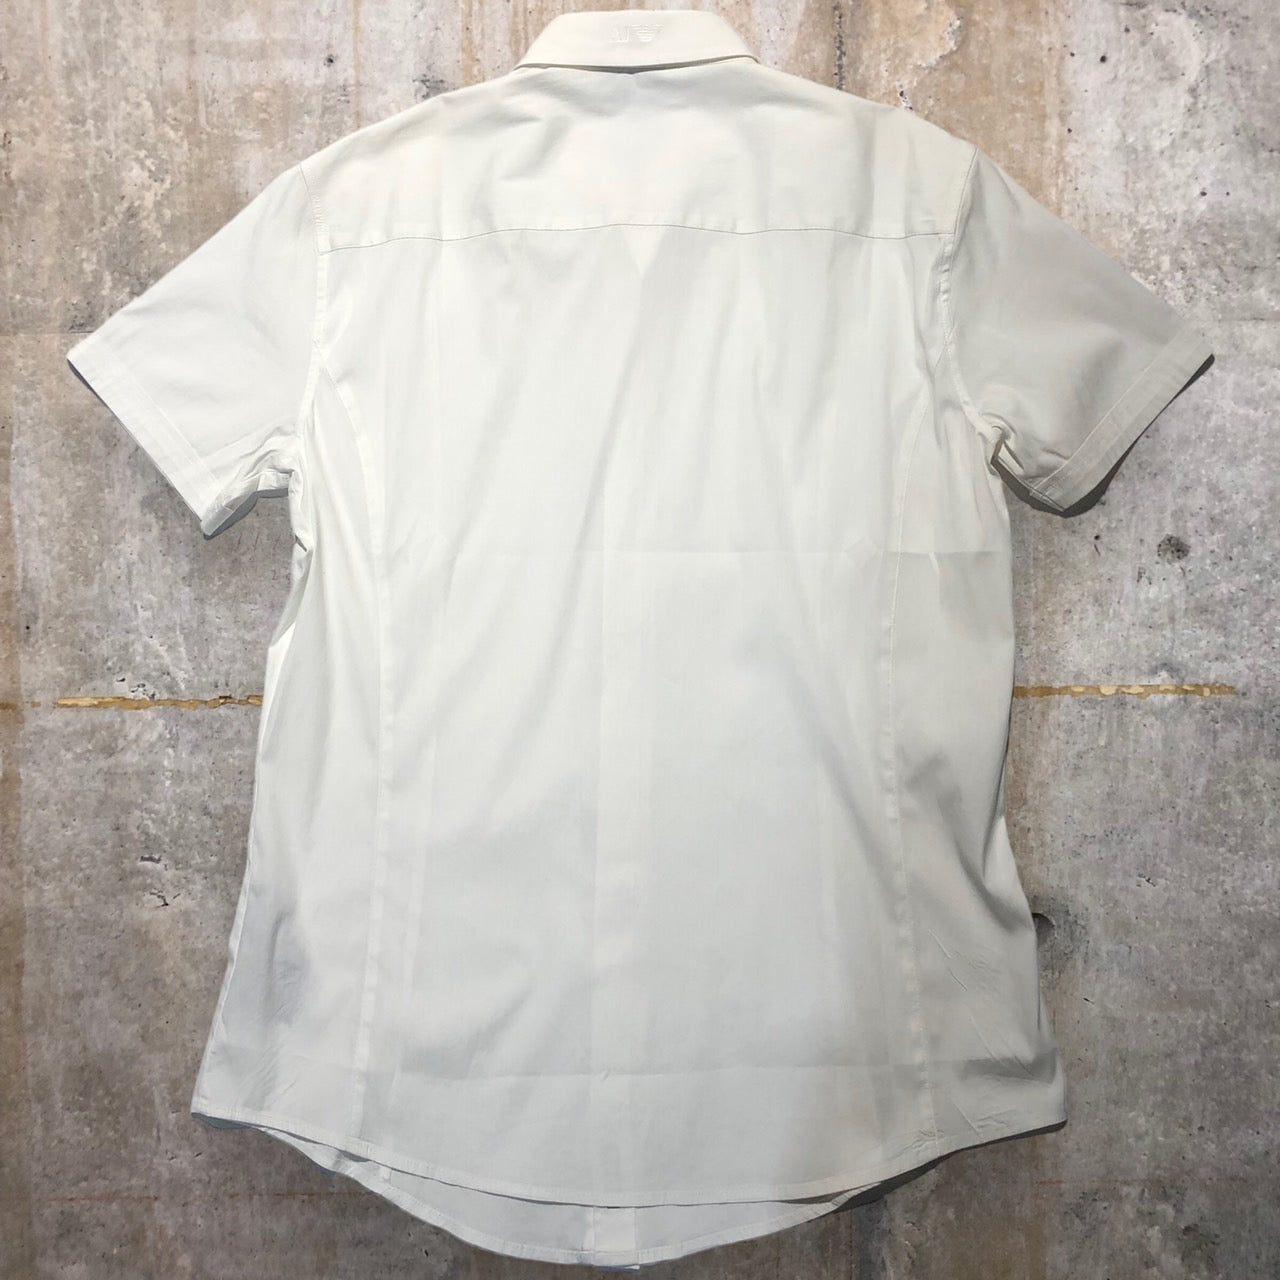 ARMANI JEANS(アルマーニジーンズ) ロゴ刺繍ストレッチ半袖シャツ L ホワイト